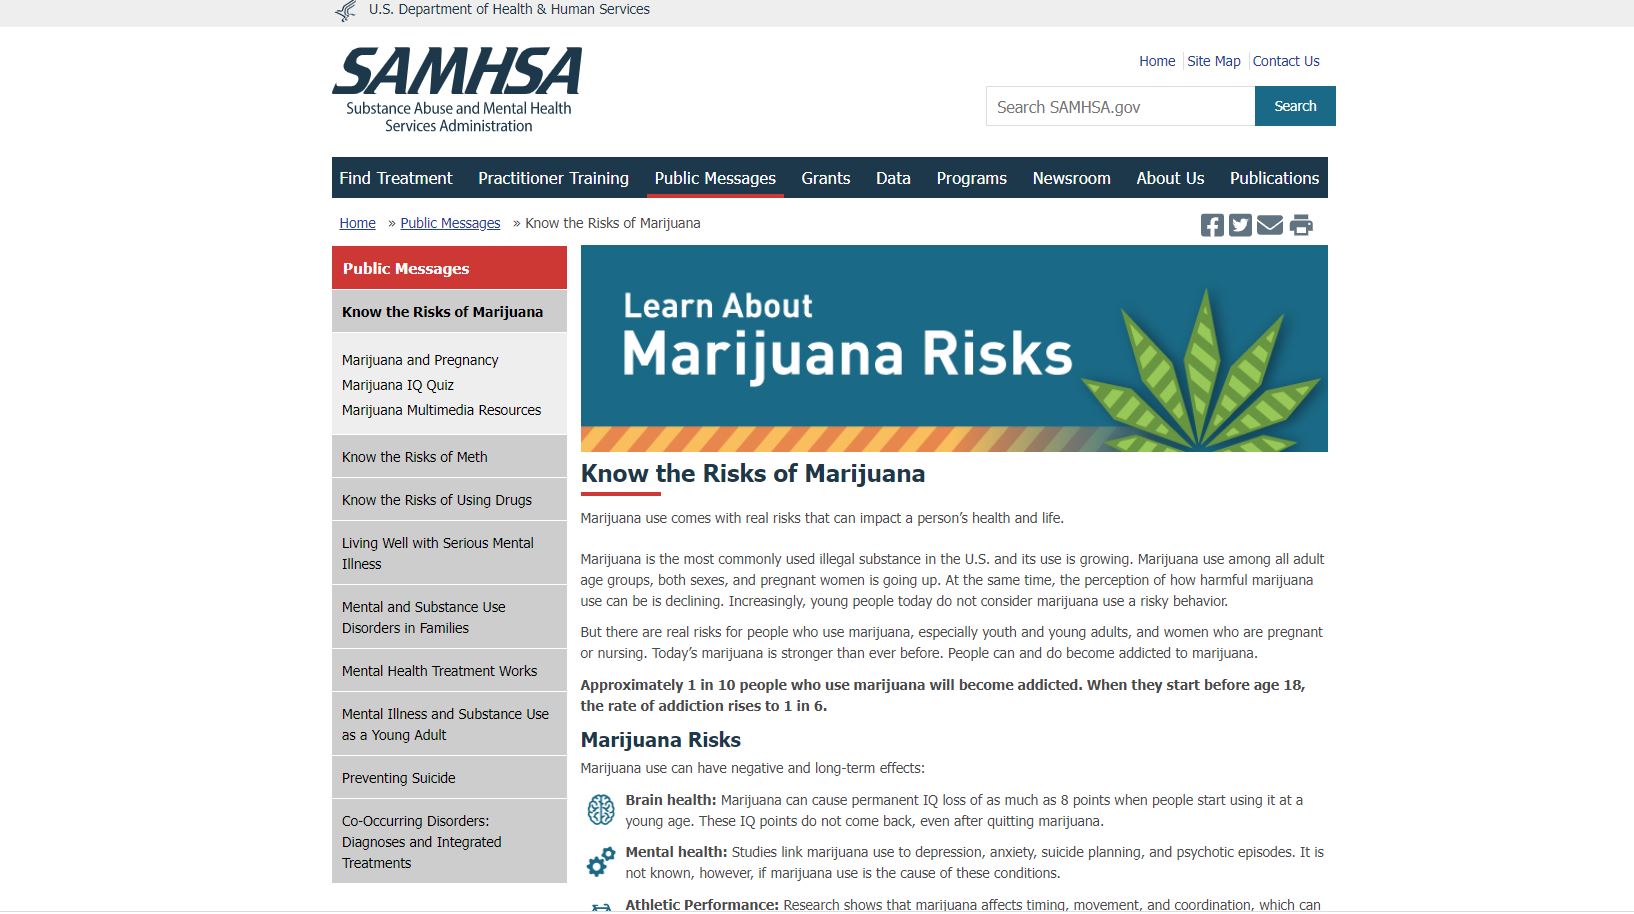 Know the Risks of Marijuana